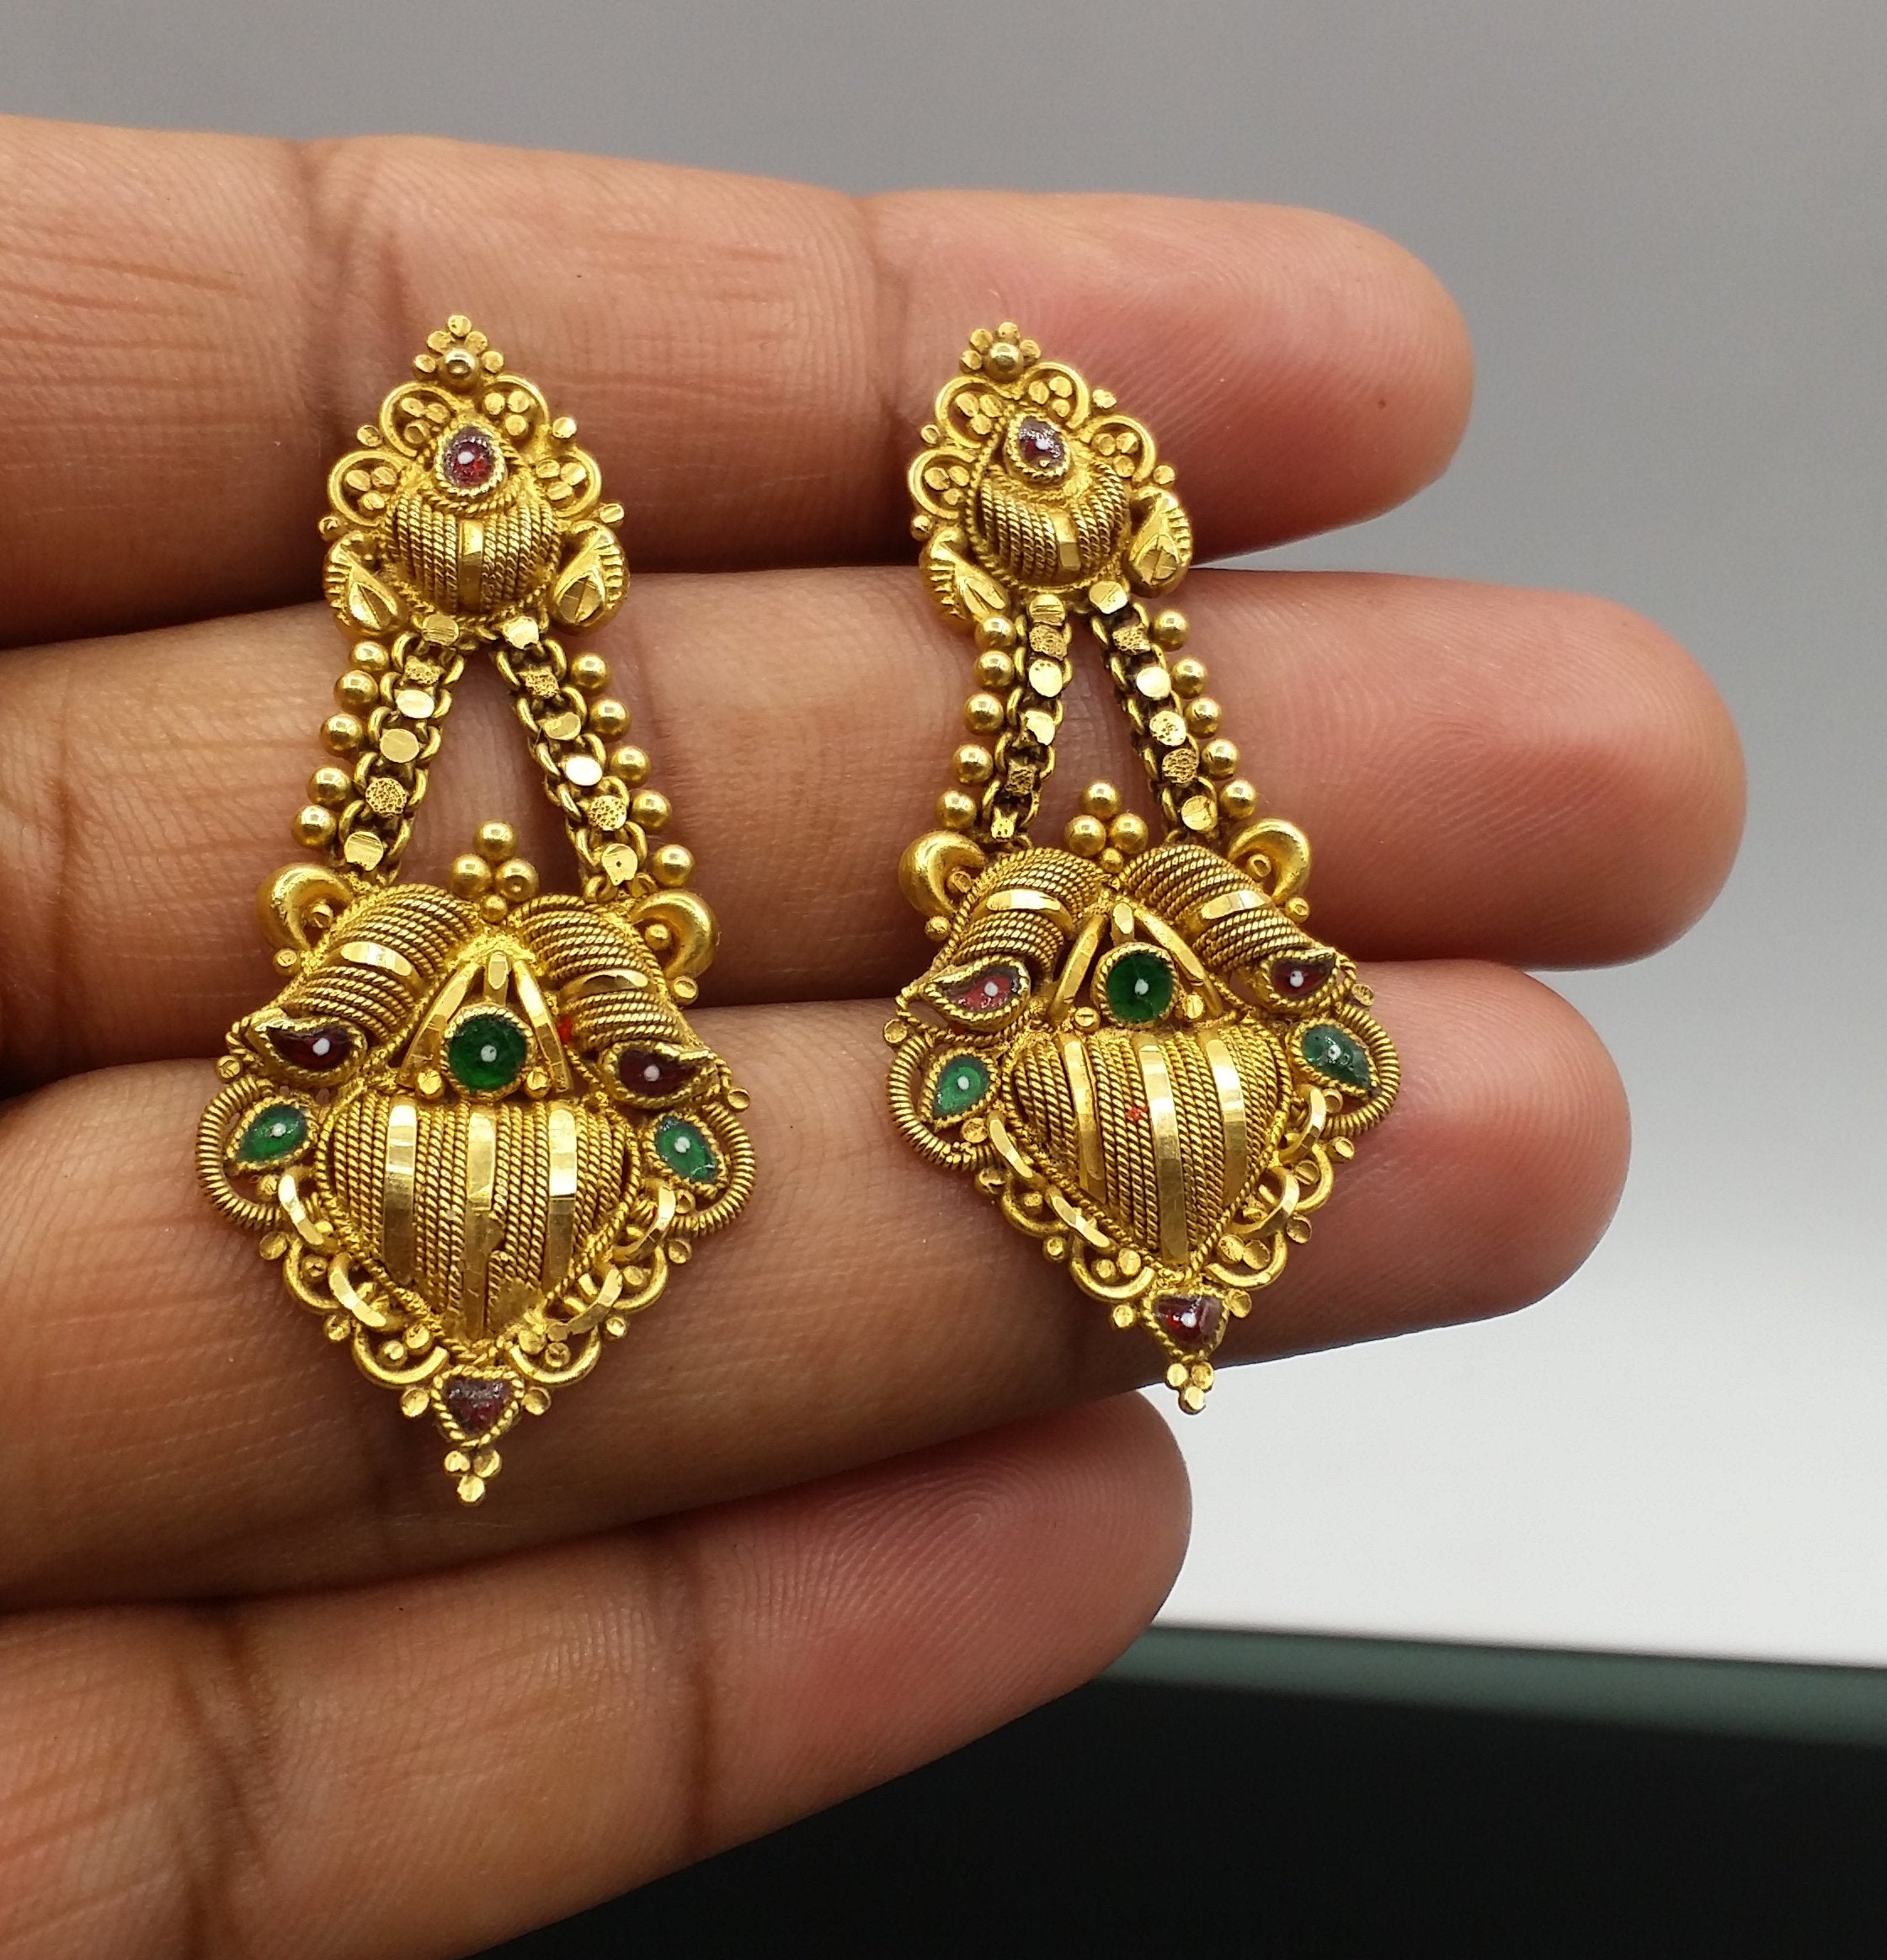 Shop online Karwari pearl earrings design at affordable prices.